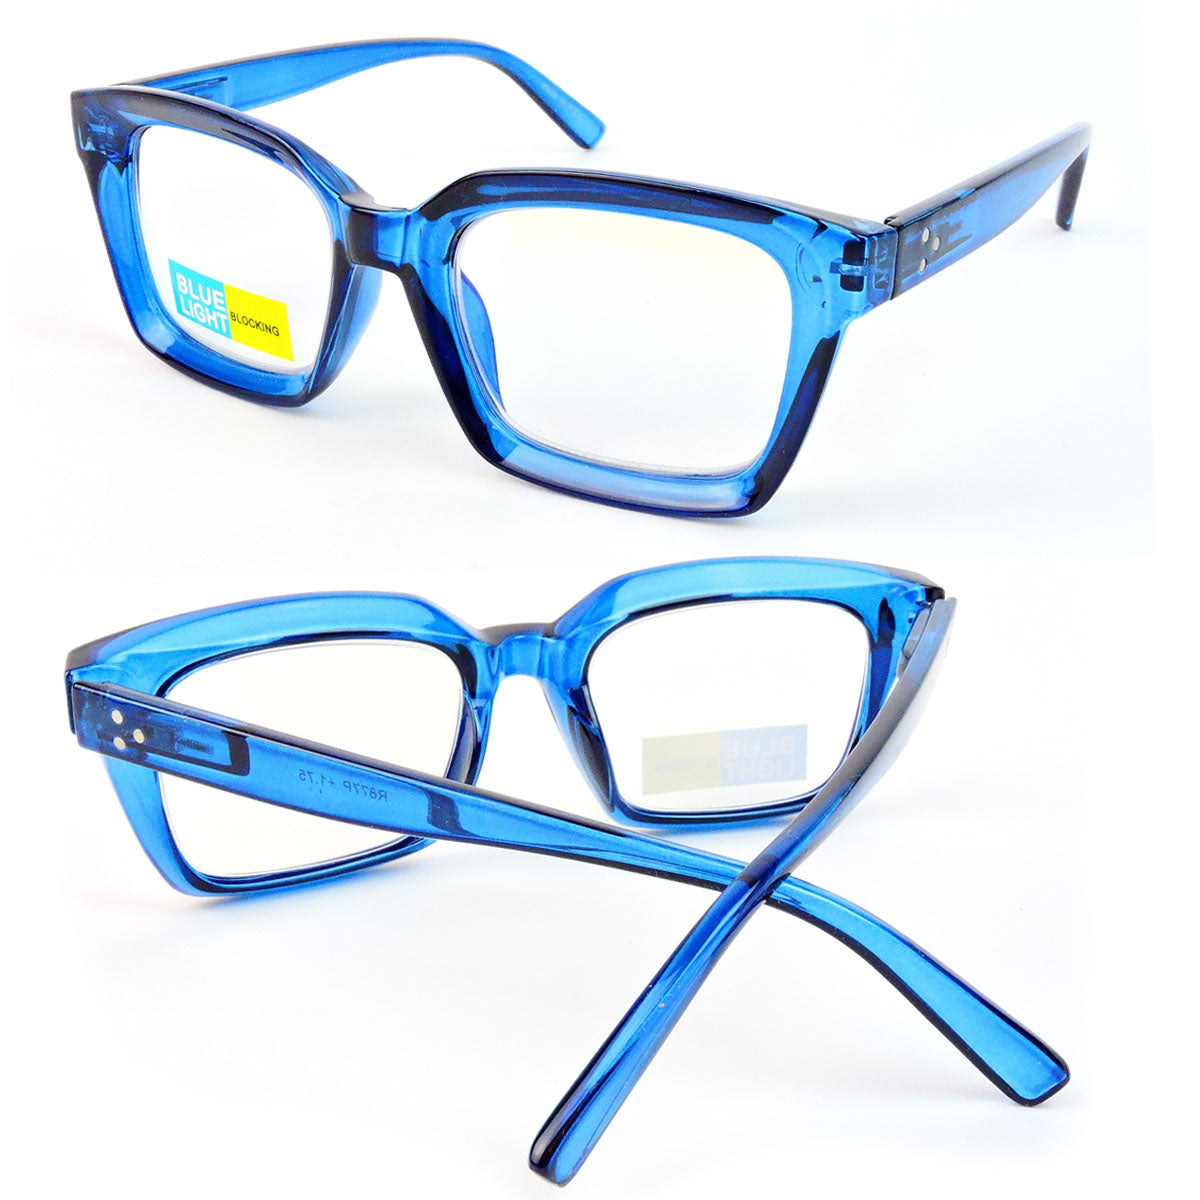 Blue Light Blocking Glasses Thick Rectangle Preppy Look - Reading Glasses - Tortoise, +1.75